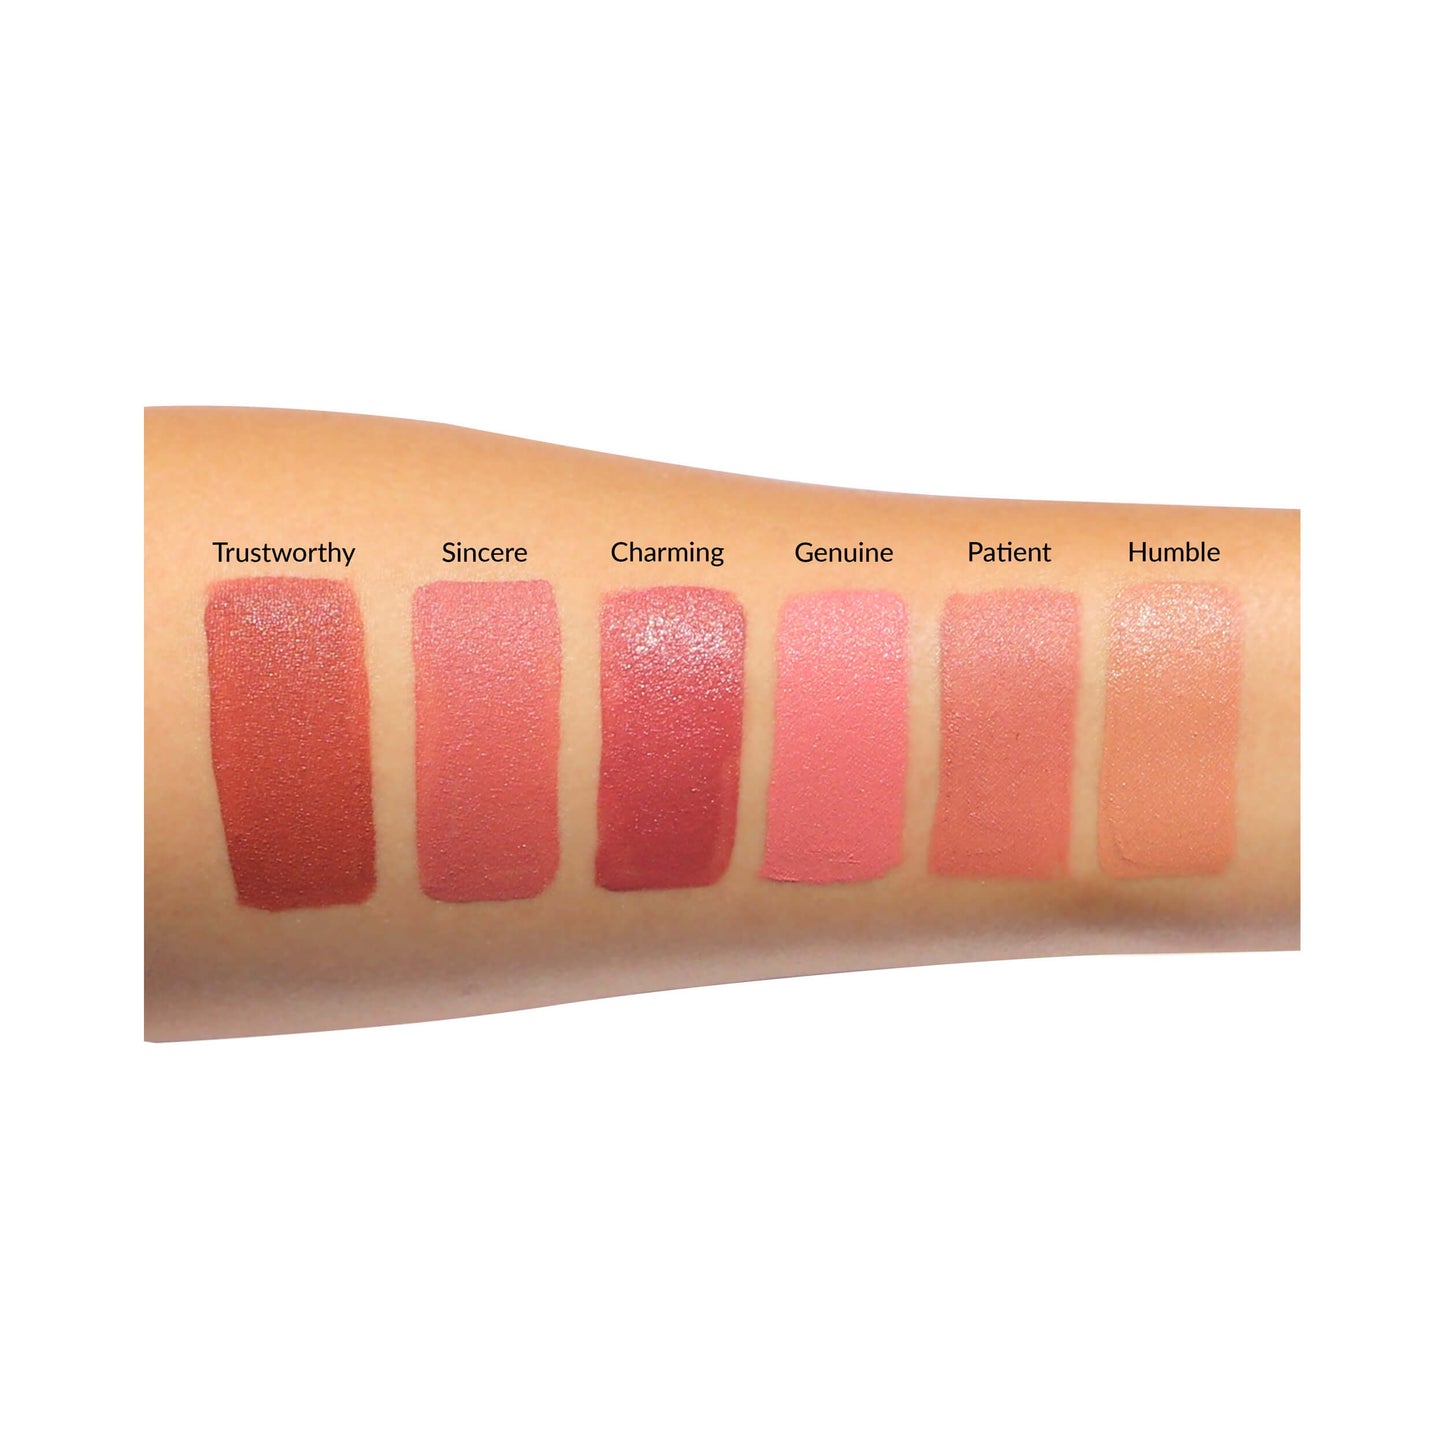 theBalm Meet Matte Hughes Nude Set of 6 Mini Long-Lasting Liquid Lipsticks Swatches